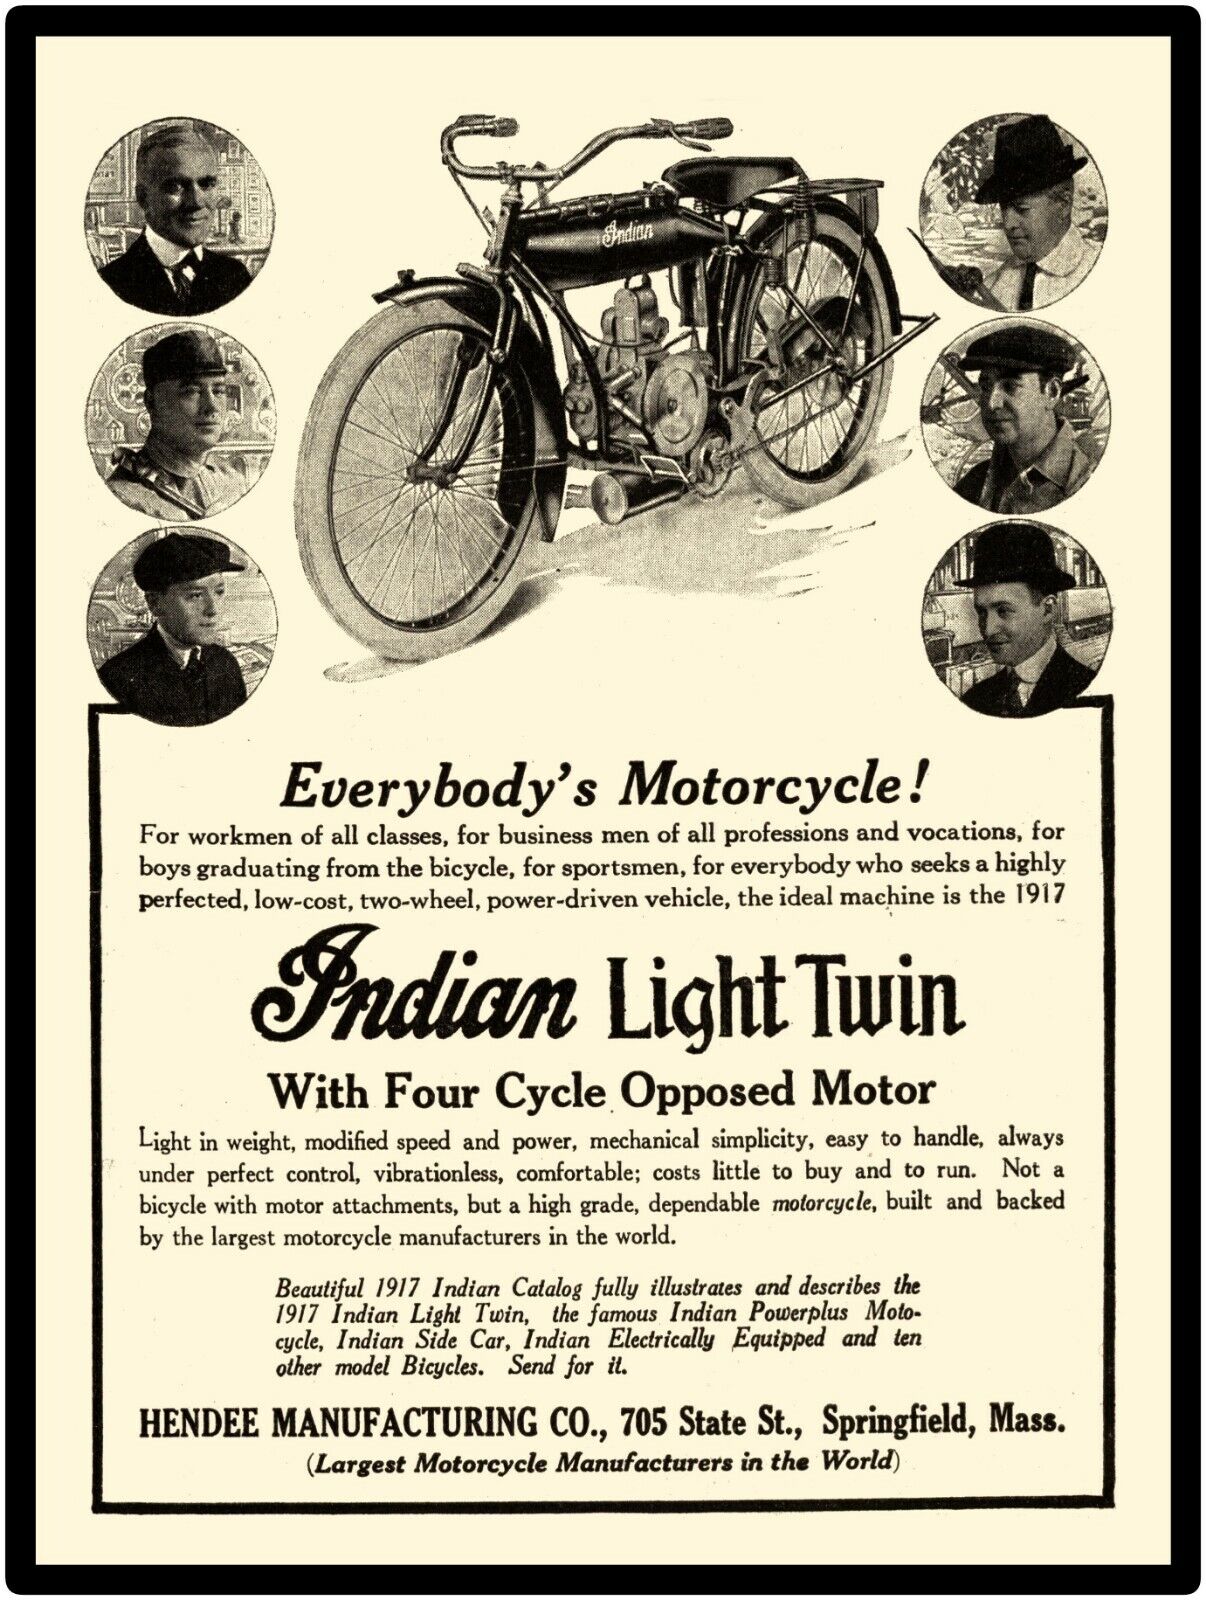 1917 Hendee Mfg. Co. New Metal Sign: Indian Motorcycle 4 Cycle Opposed Motor